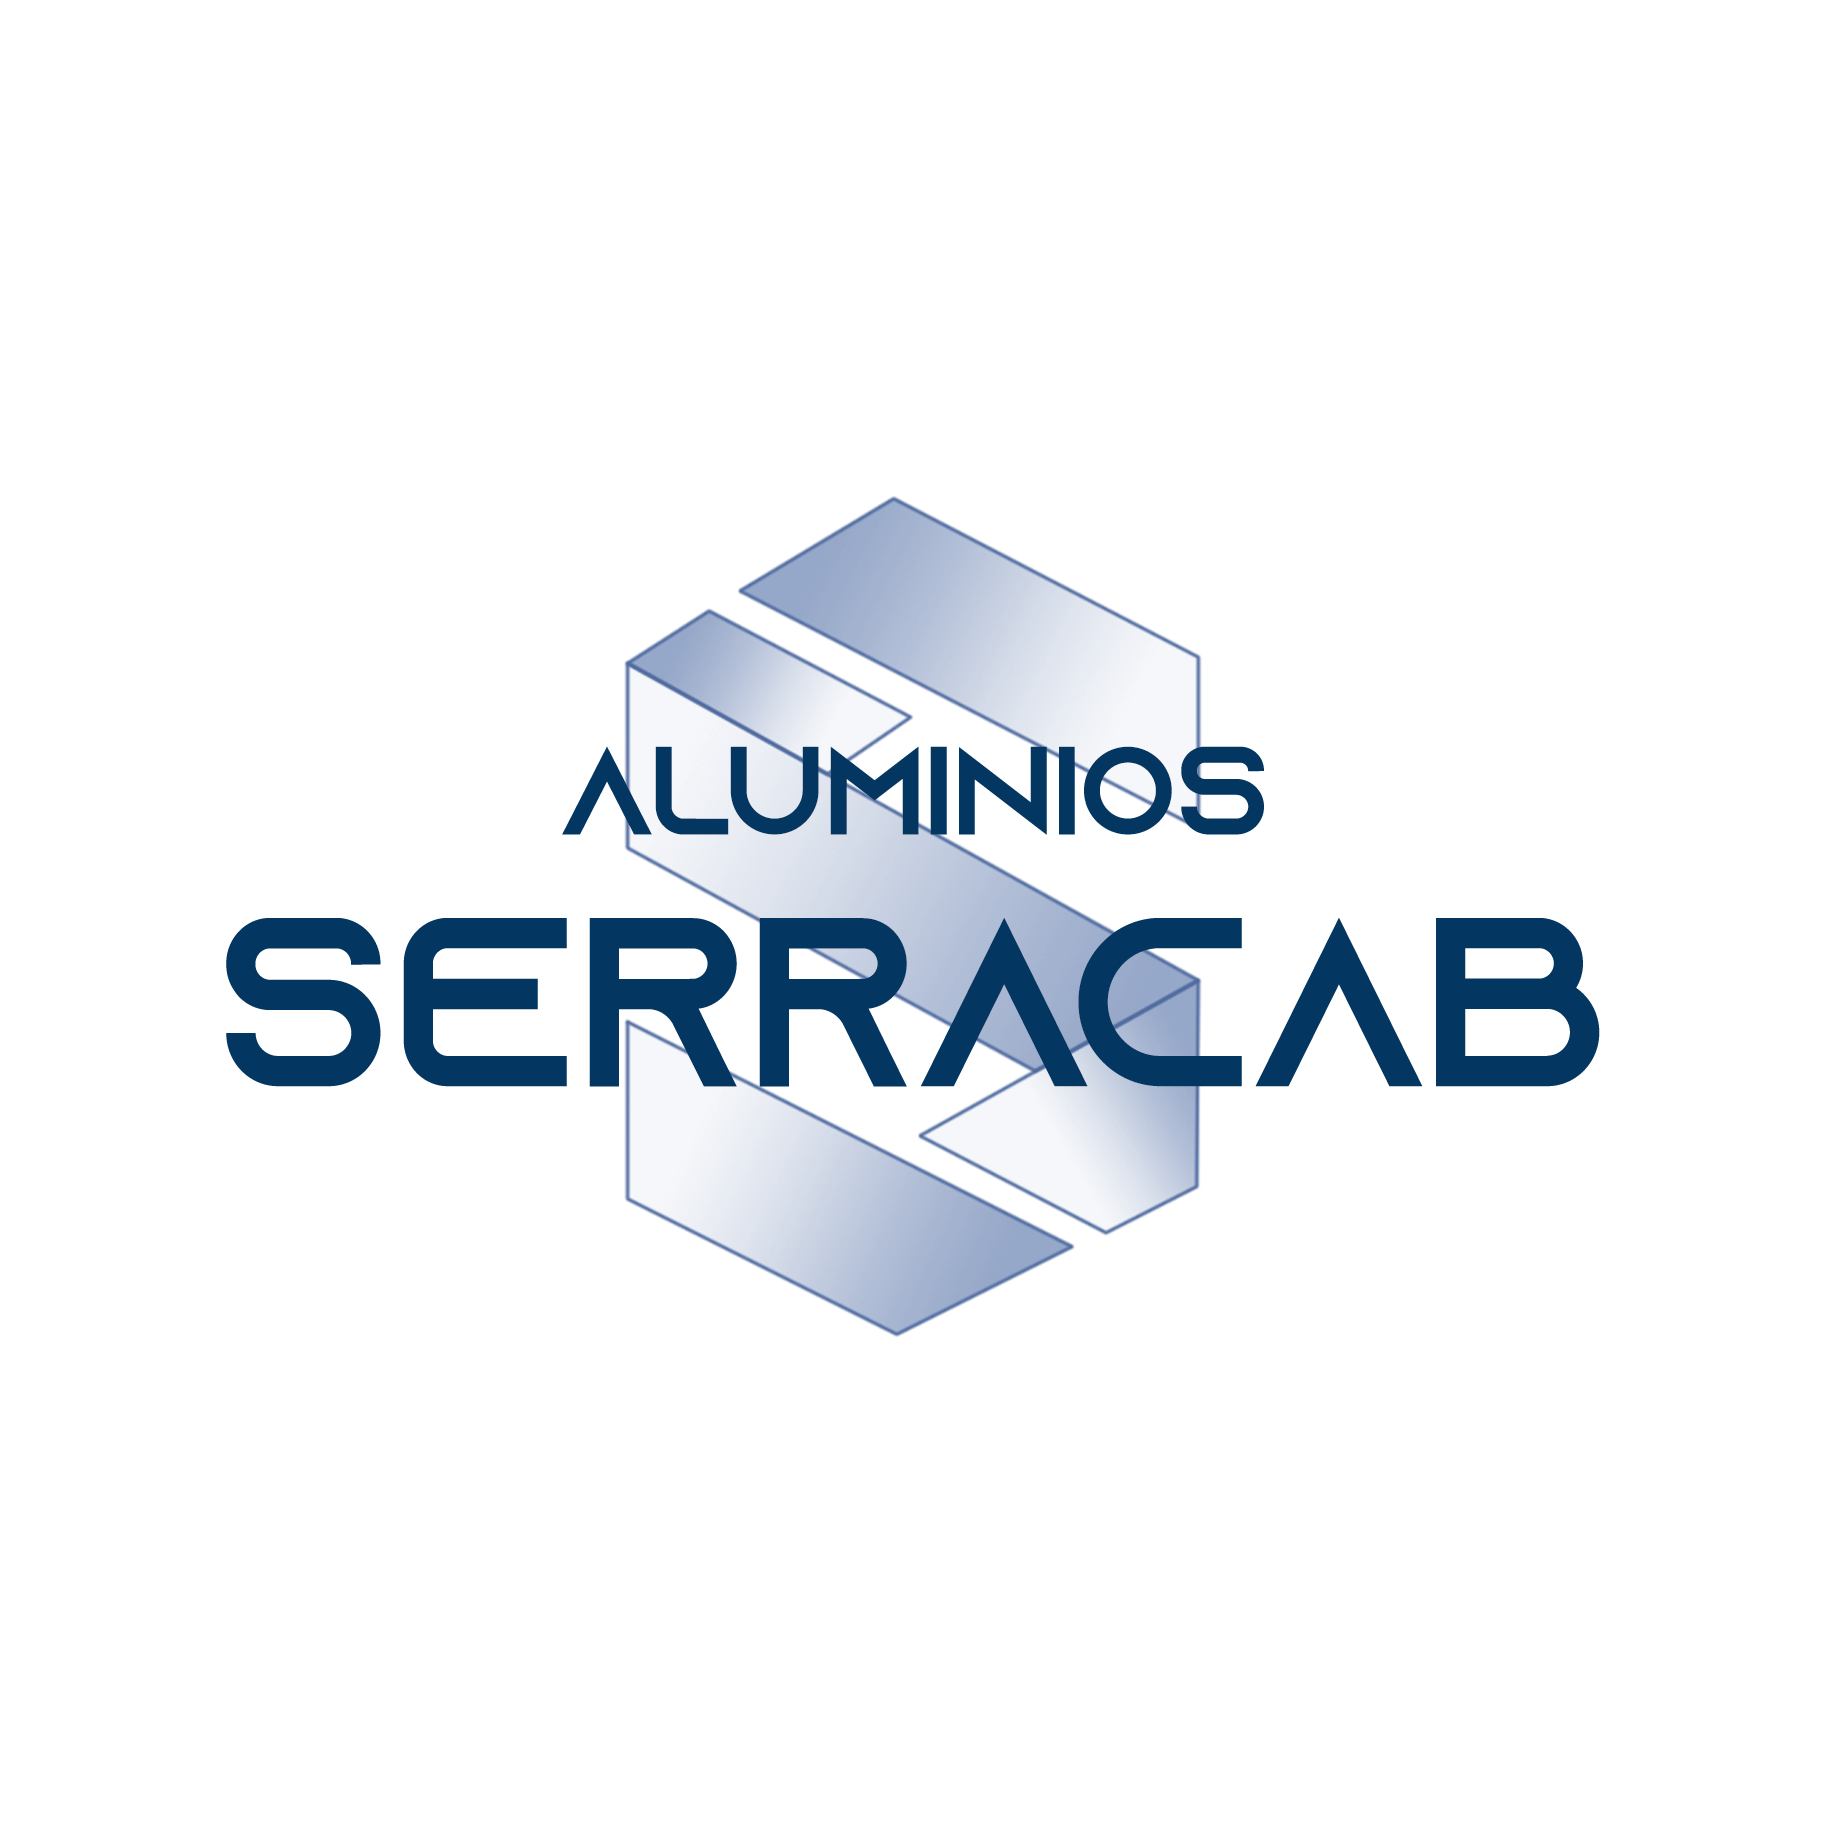 Aluminios Serracab Logo